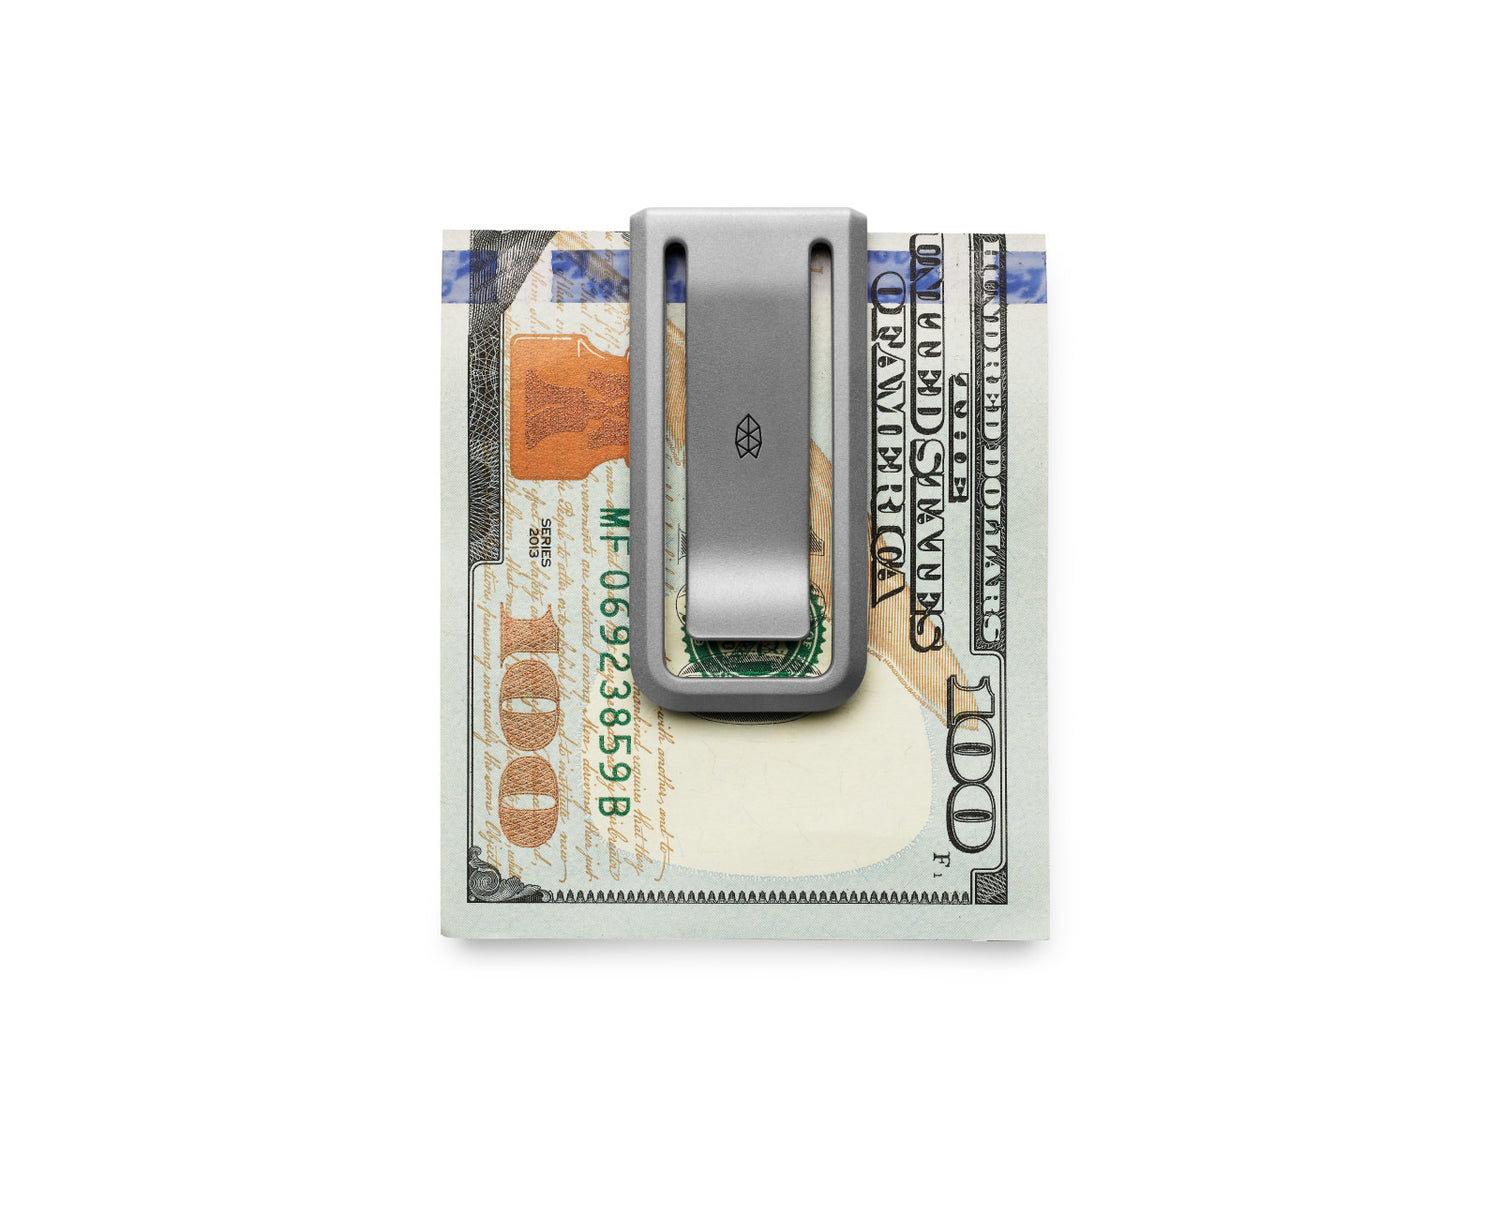 The Martindale titanium money clip with cash.